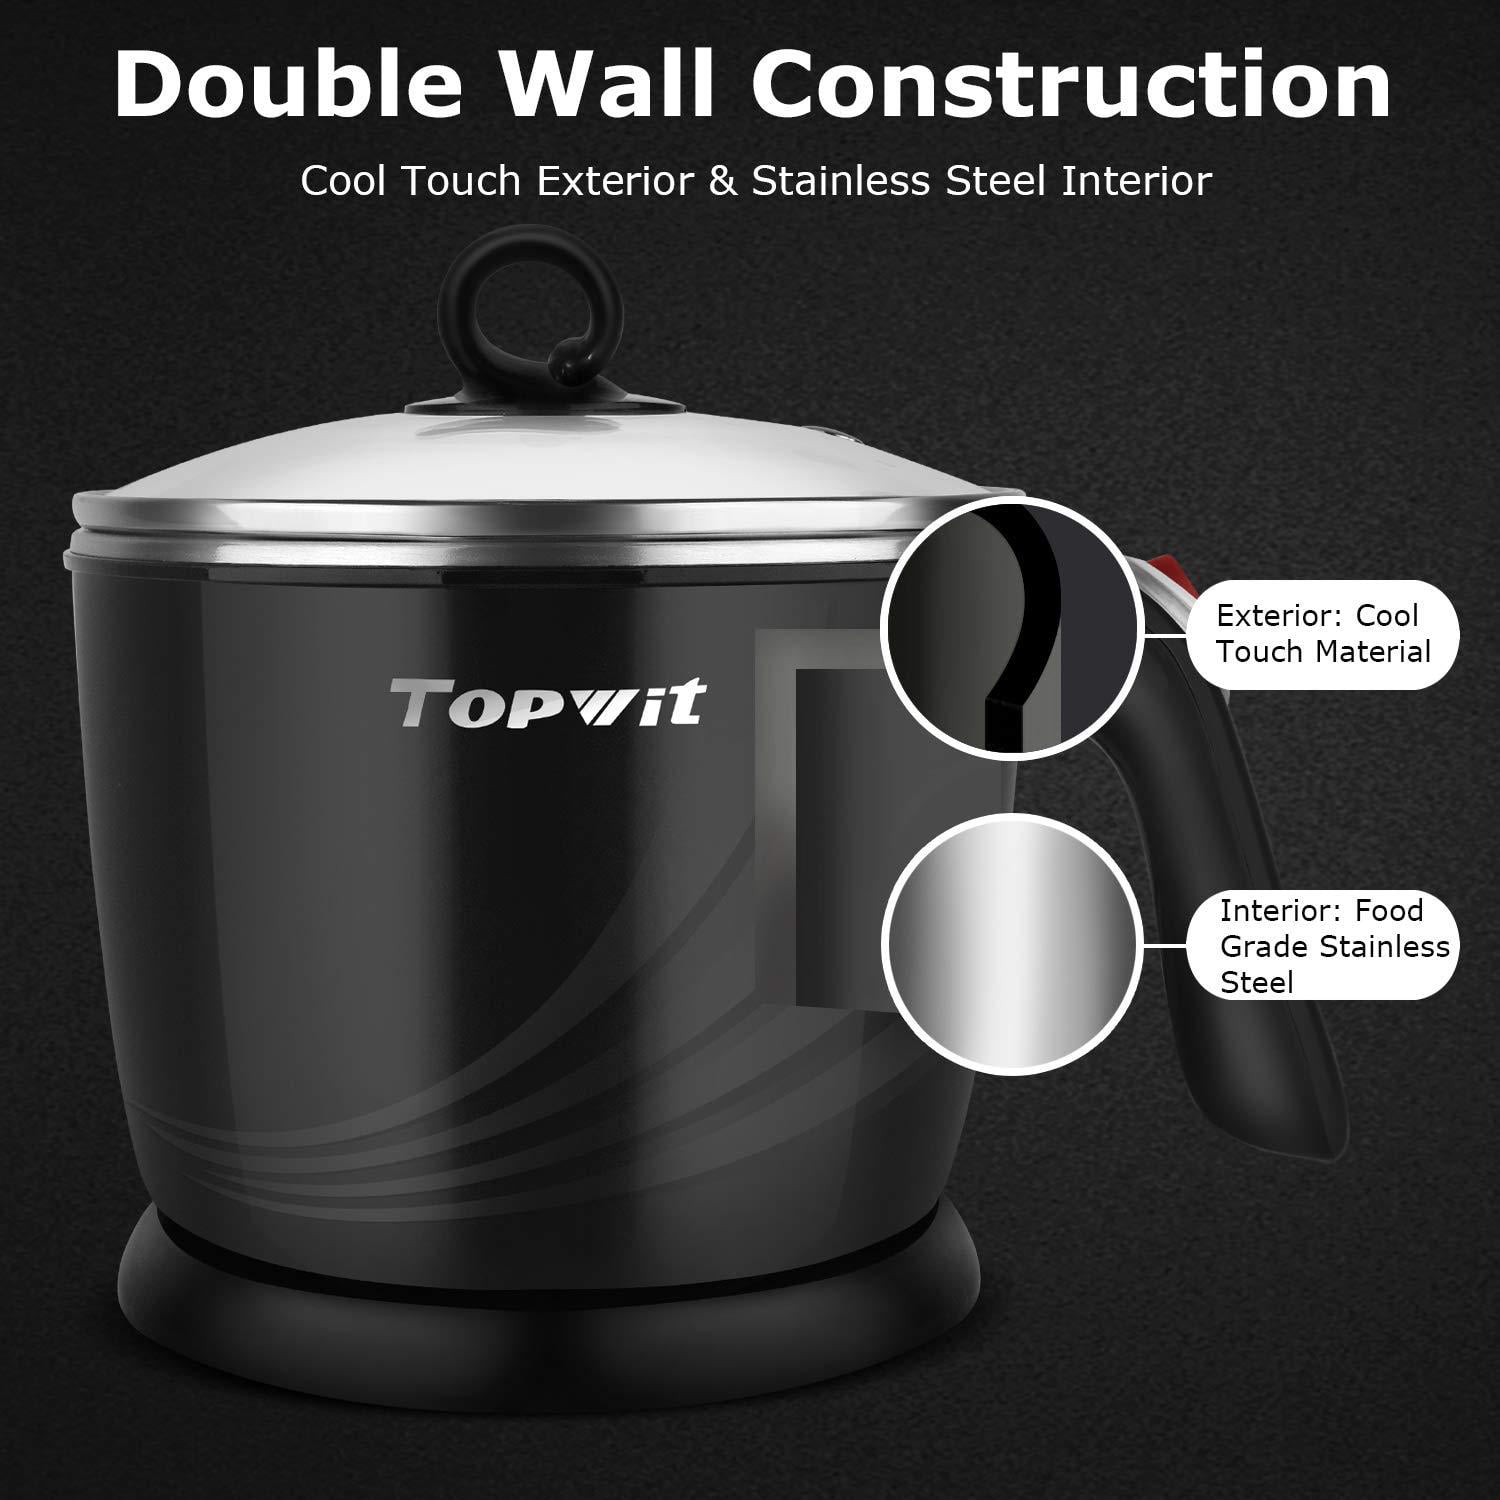 Topwit Multi-Function Electric Hot Pot #topwit #hotpot